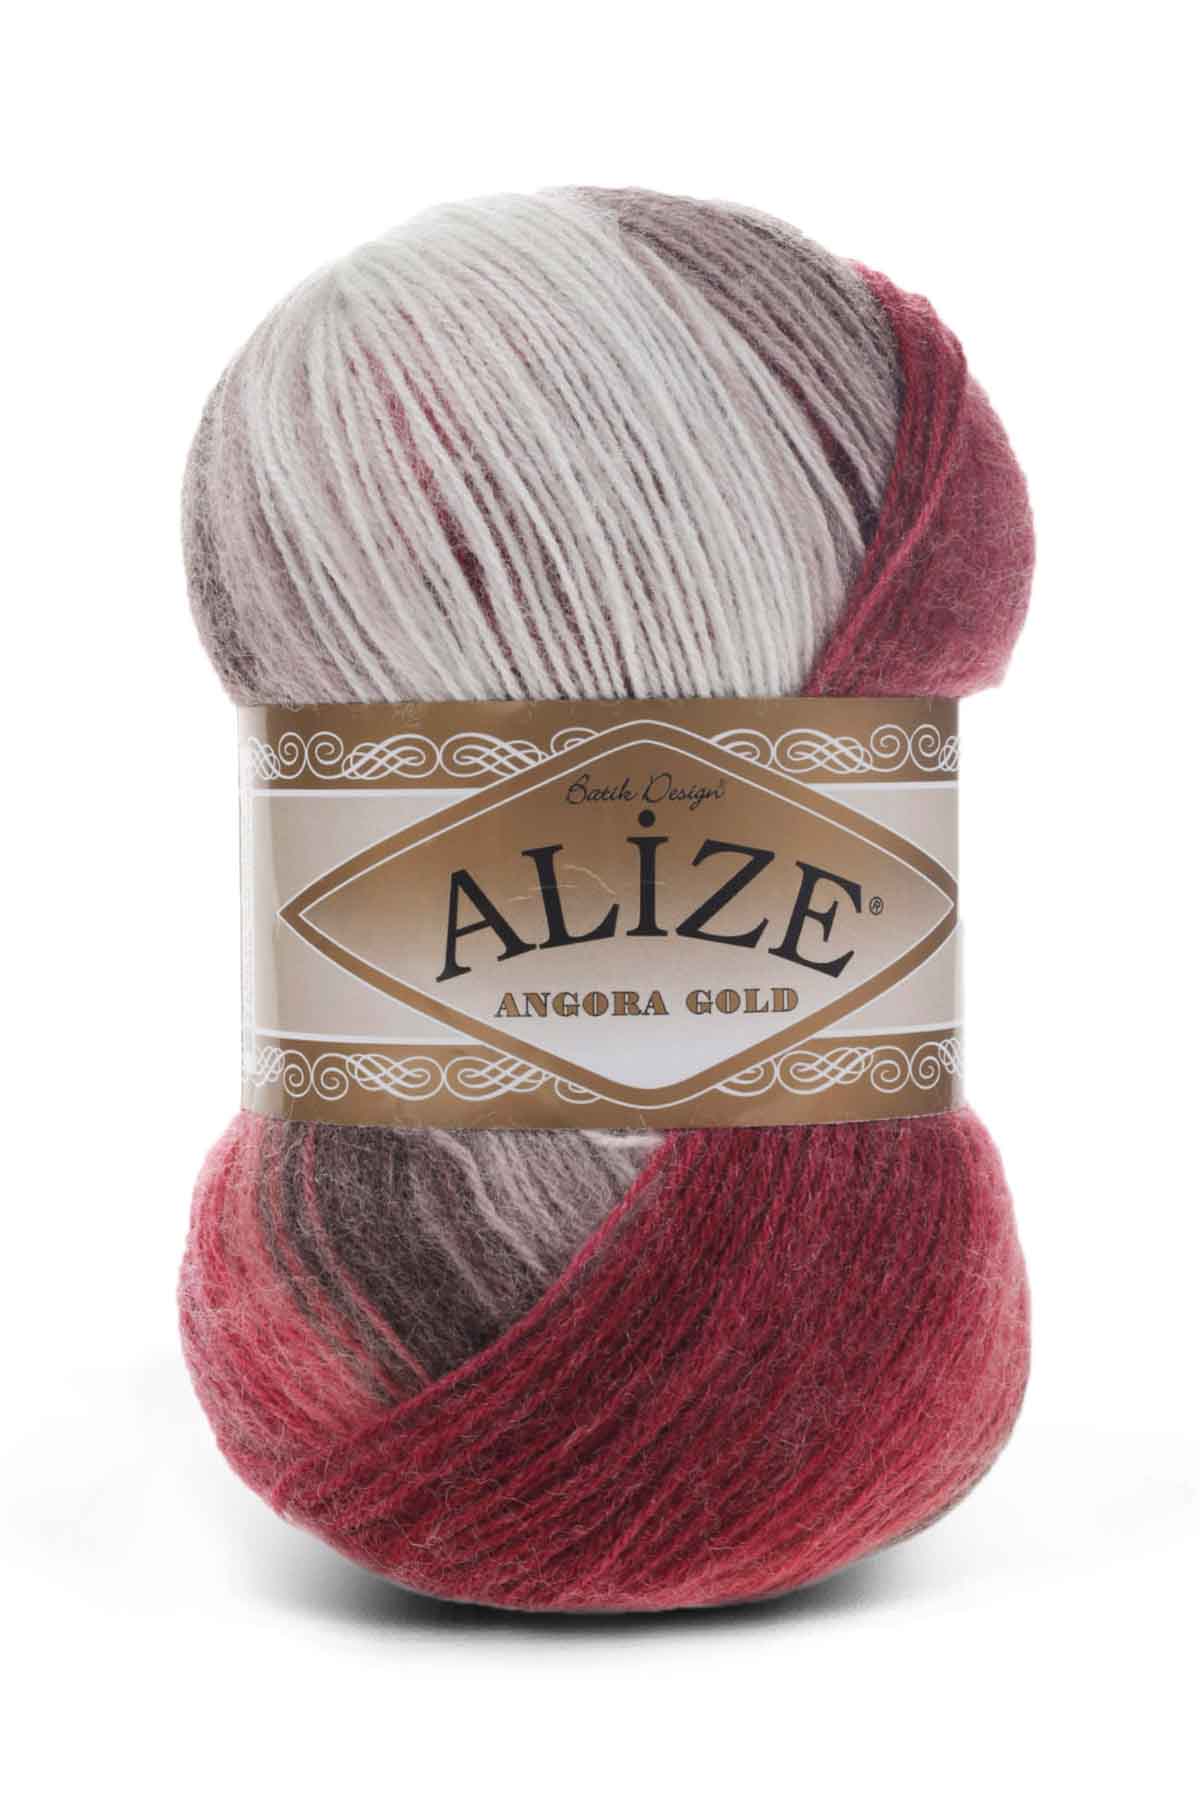 Alize Angora Batik Variegated Wool Yarn